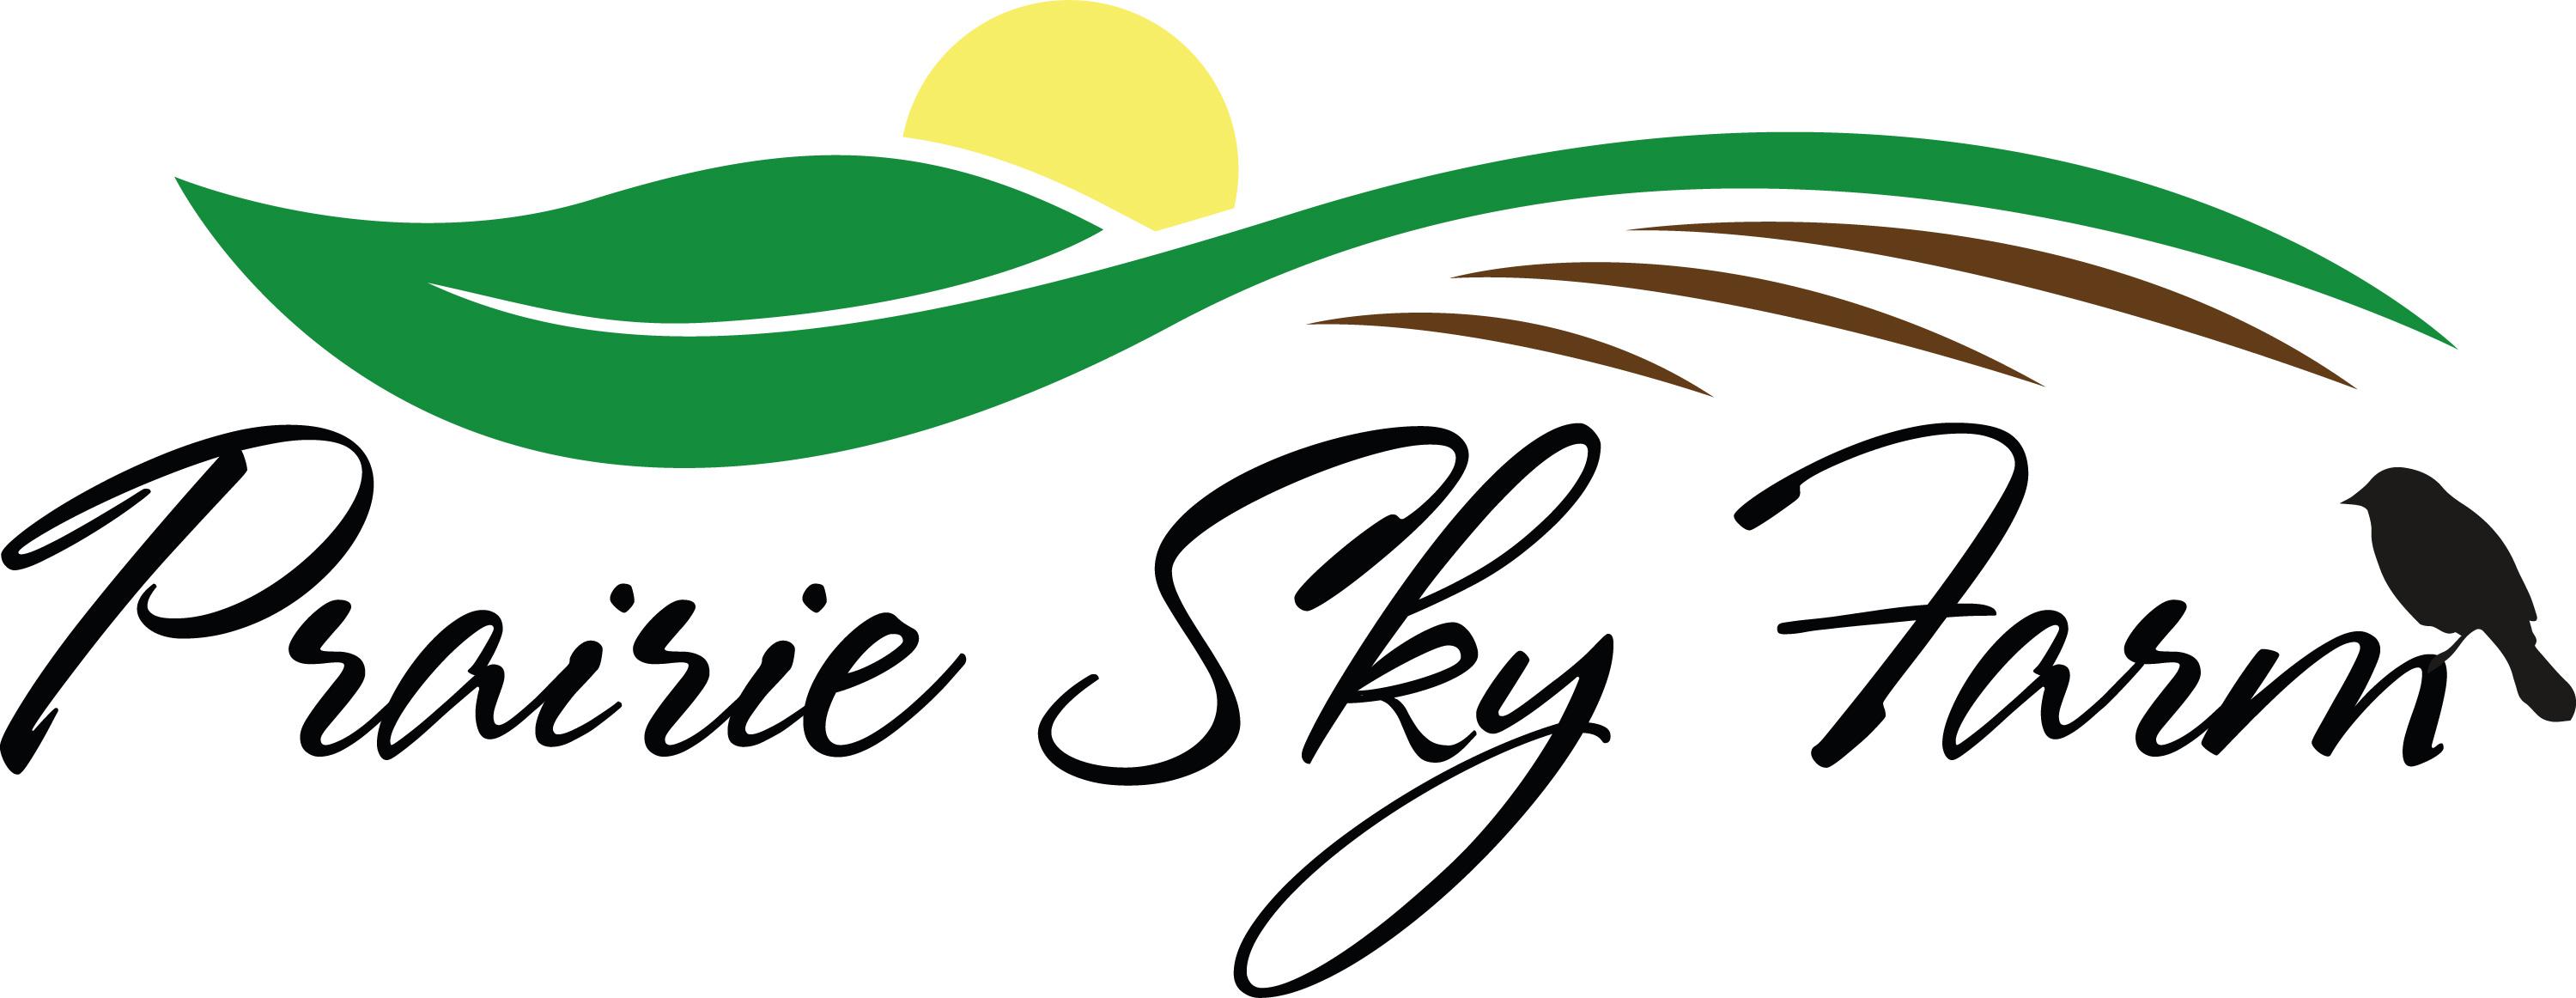 Prairie Logo - Prairie Sky Farm Logo Color Rgb. Healthy Harvest Of North Iowa